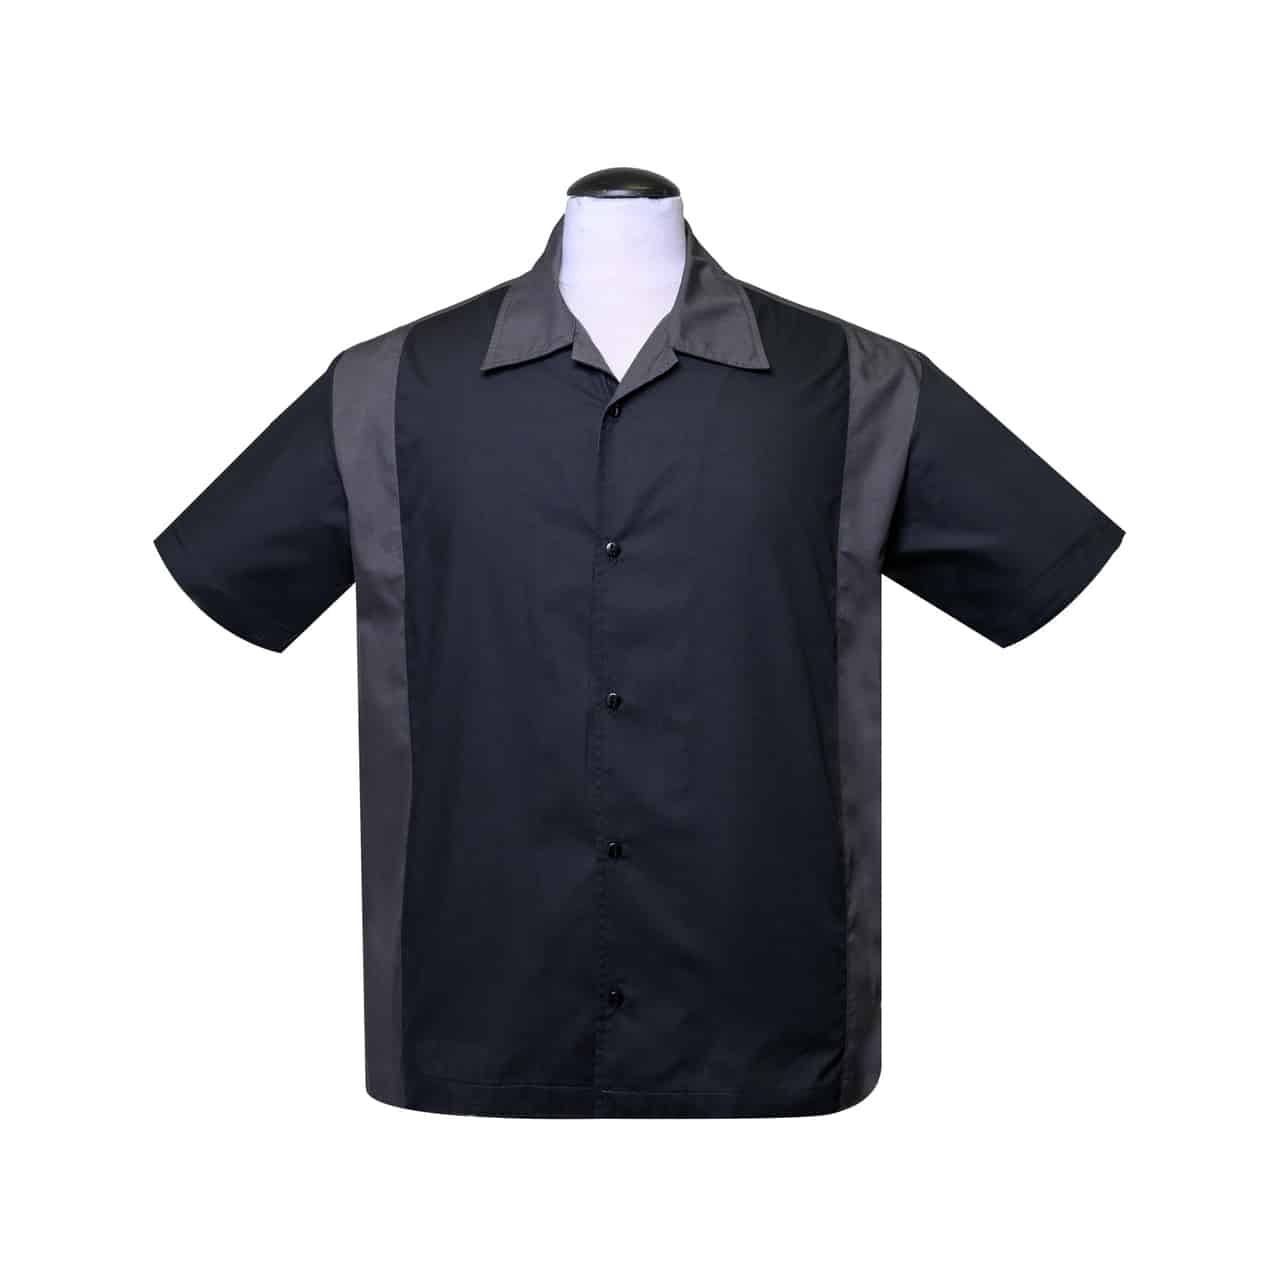 Black and Charcoal Bowling Shirt